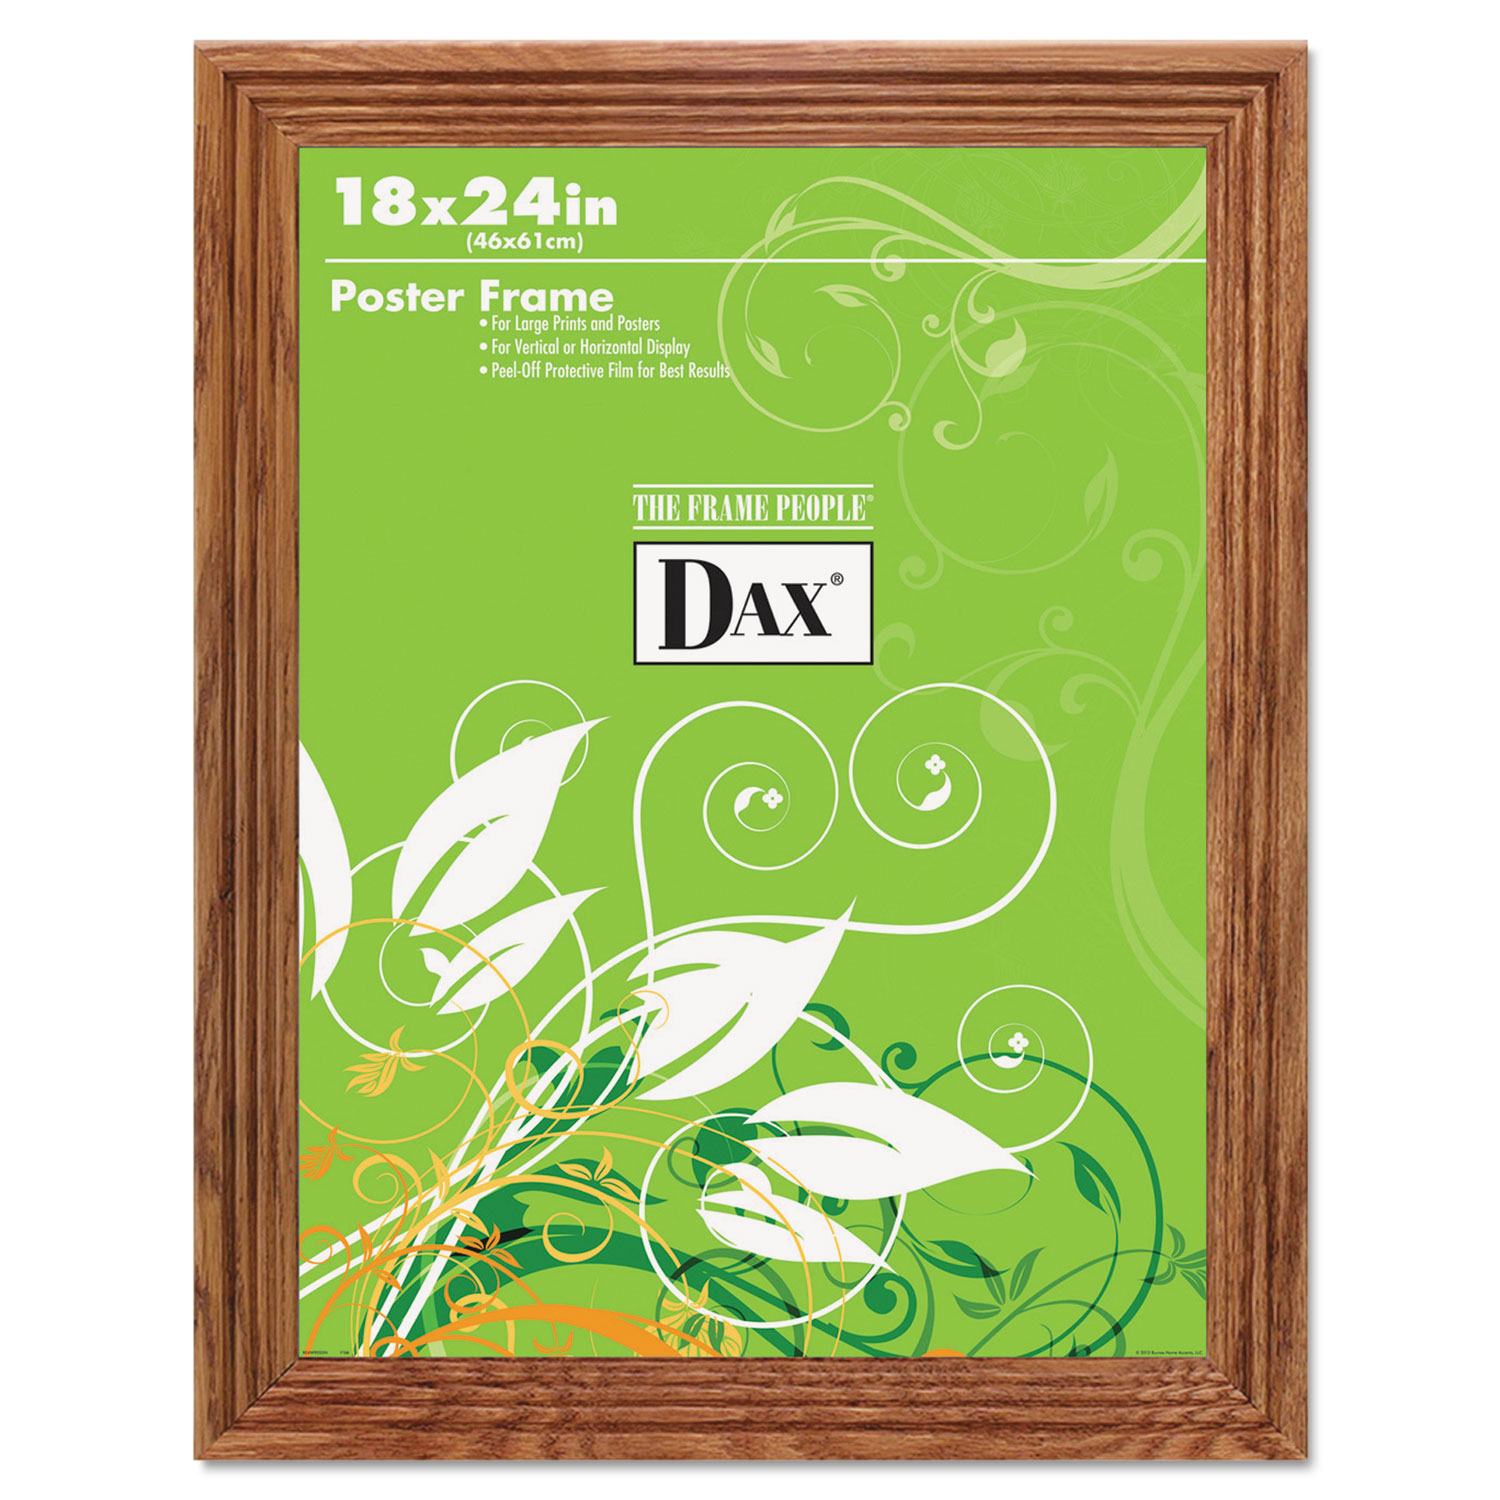 DAX Plastic Poster Frame, Traditional Clear Plastic Window, 18 x 24, Medium Oak